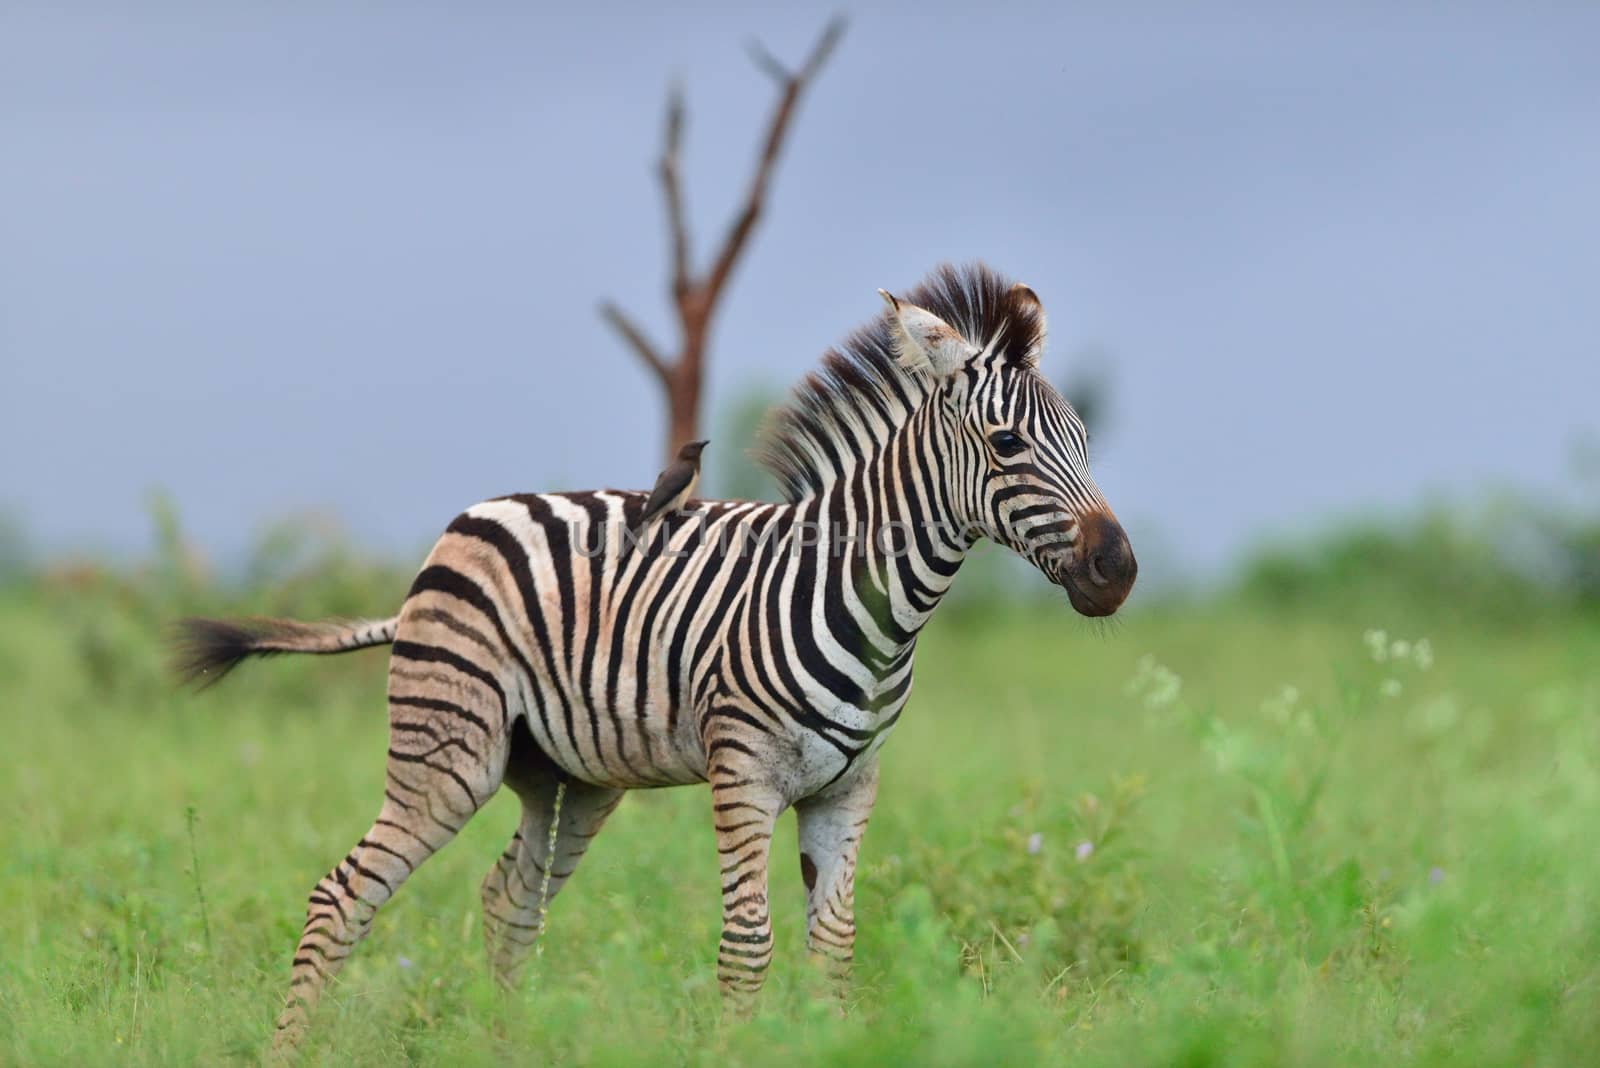 Zebra foal in the wilderness of Africa